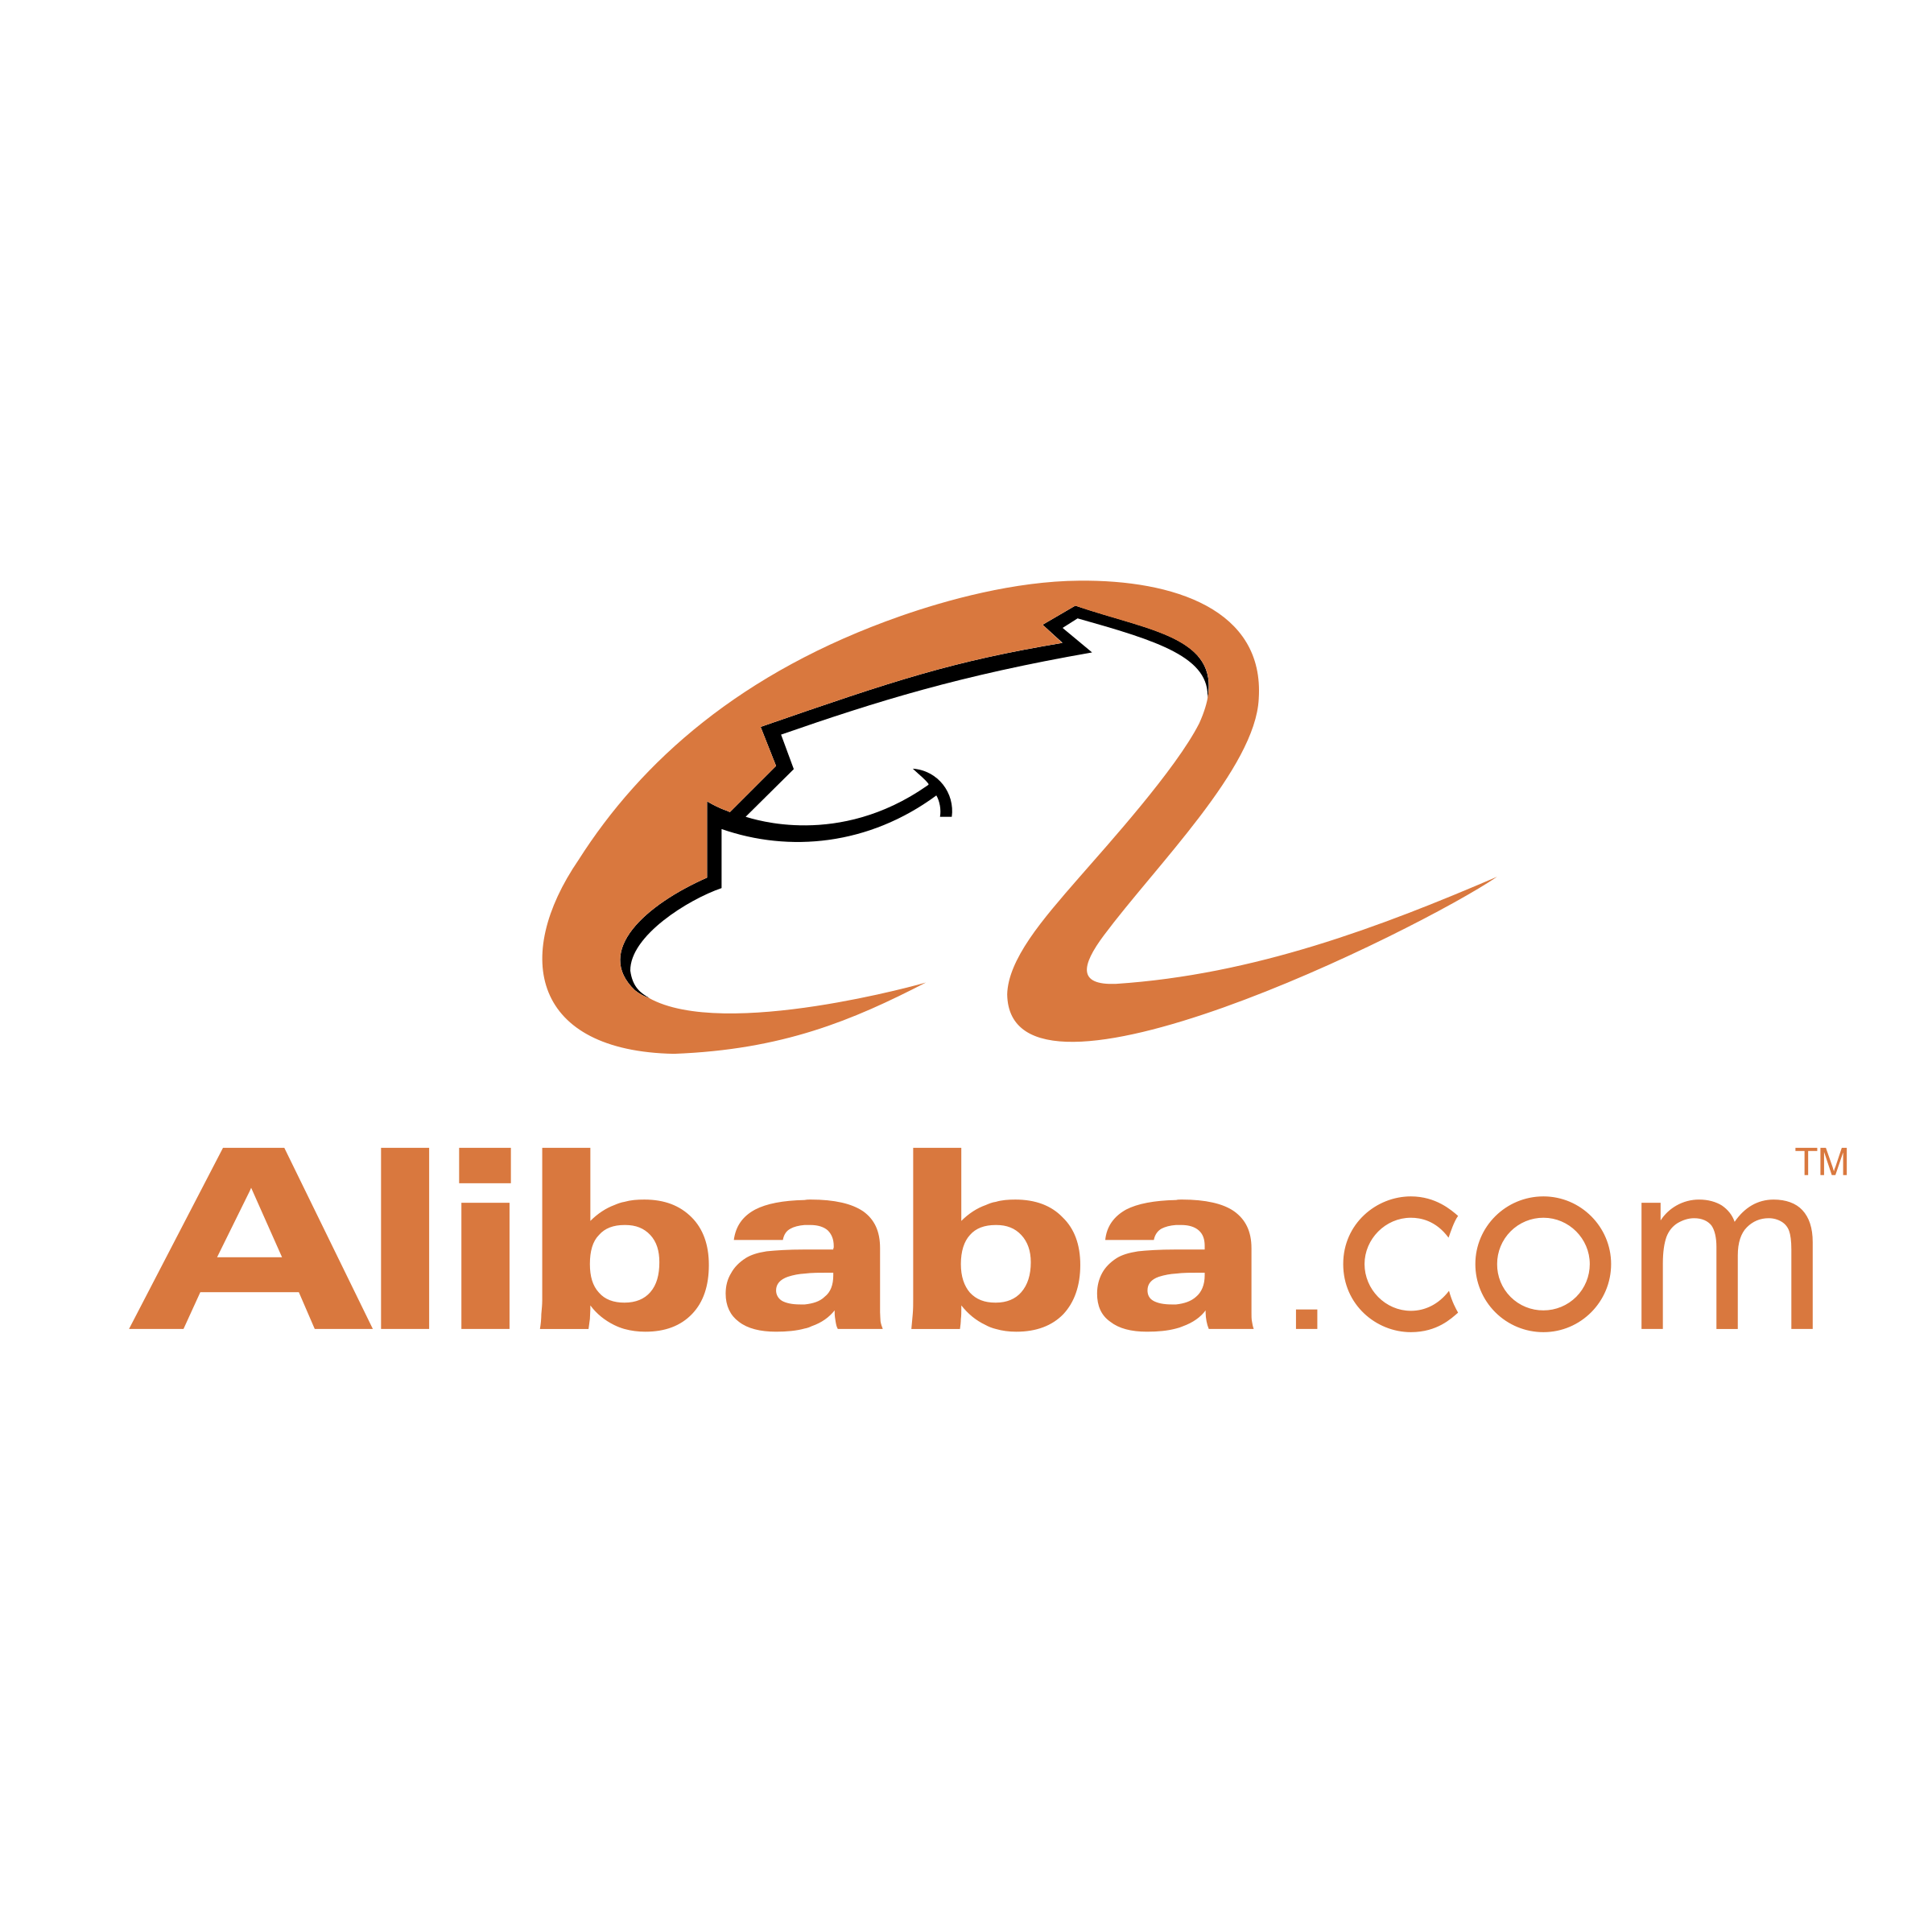 2018 Alibaba Logo - LogoDix